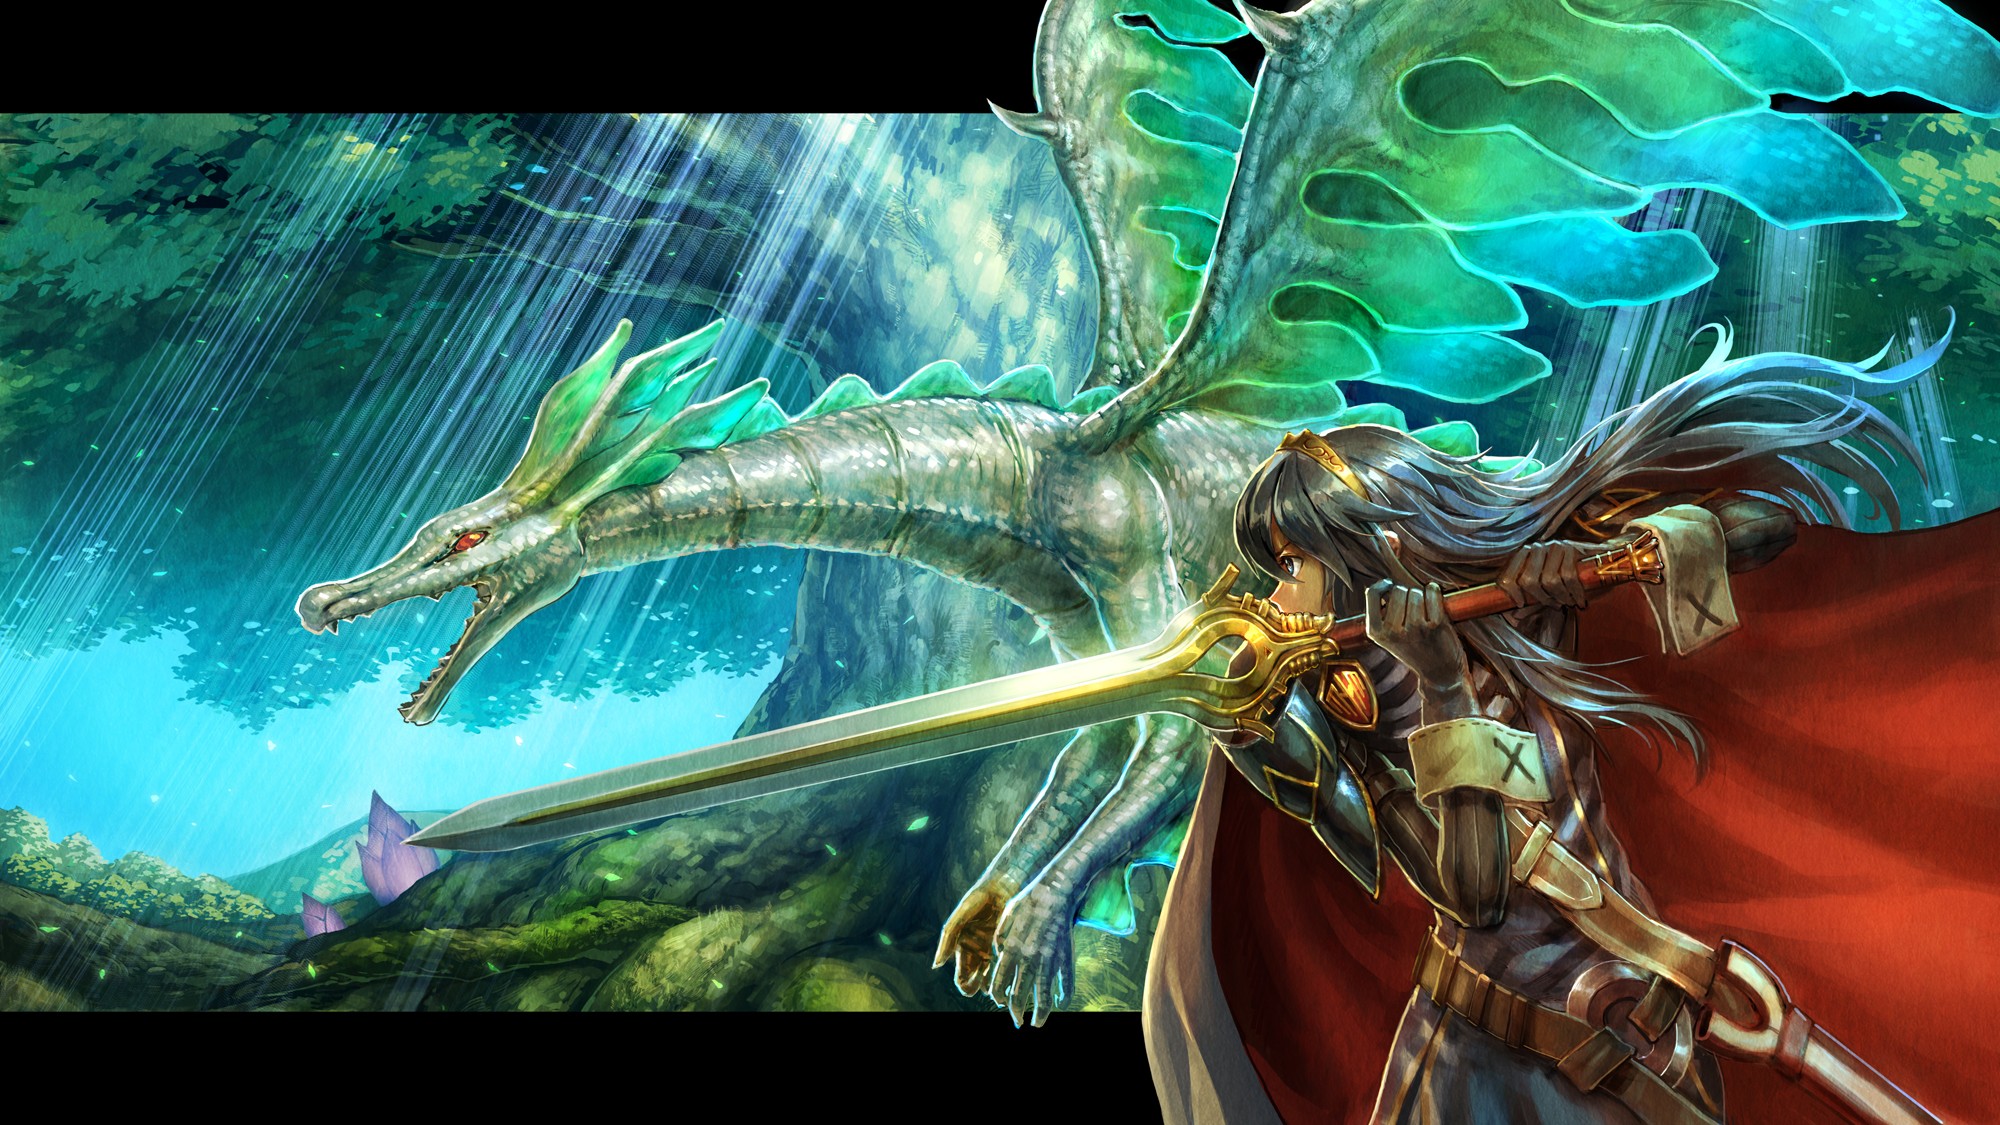 fire emblem awakening wallpaper,cg artwork,action adventure game,dragon,mythology,fictional character